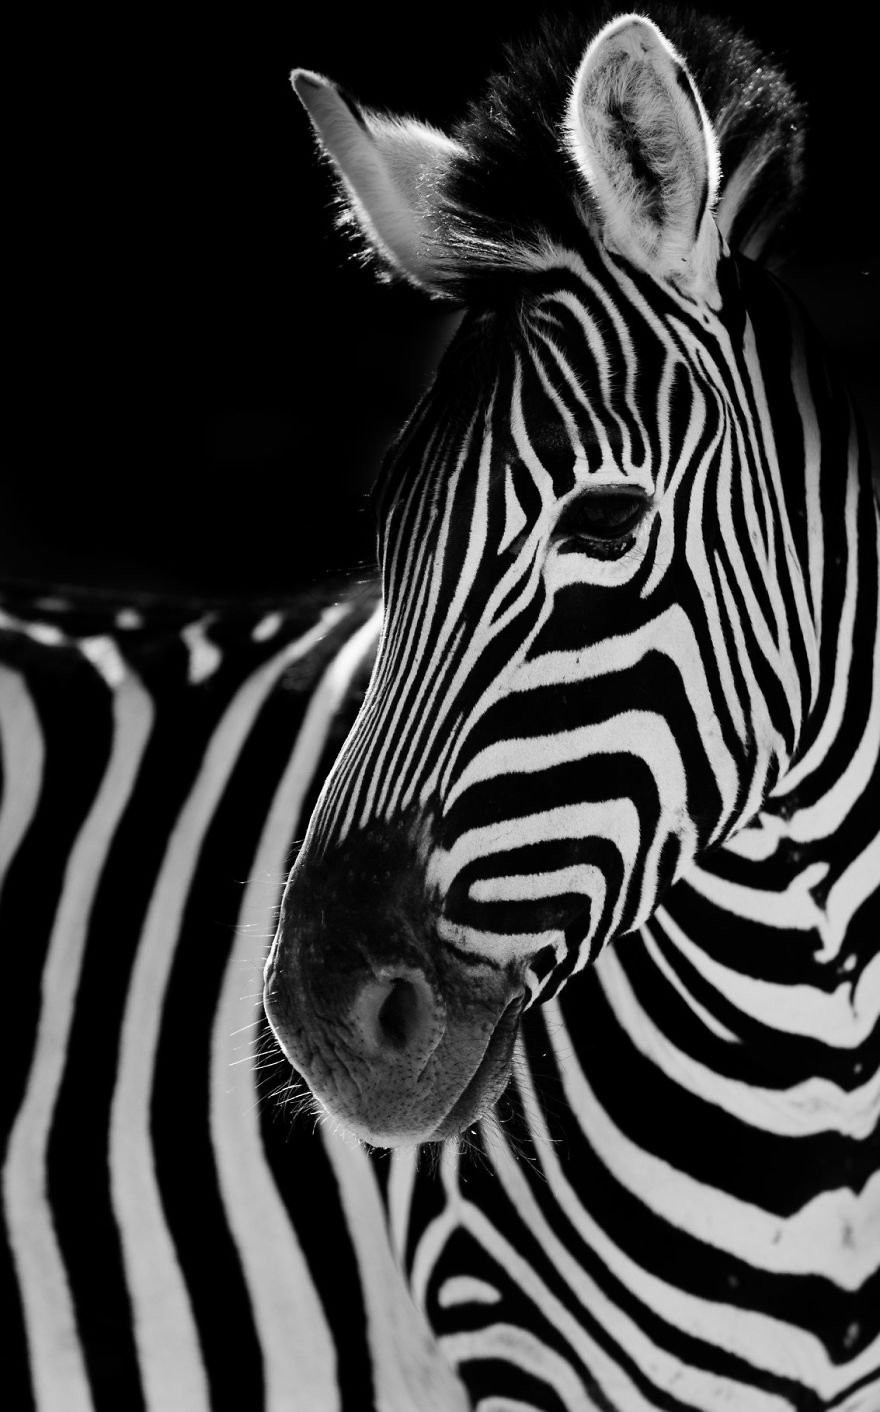 Zebras In Color Photographs